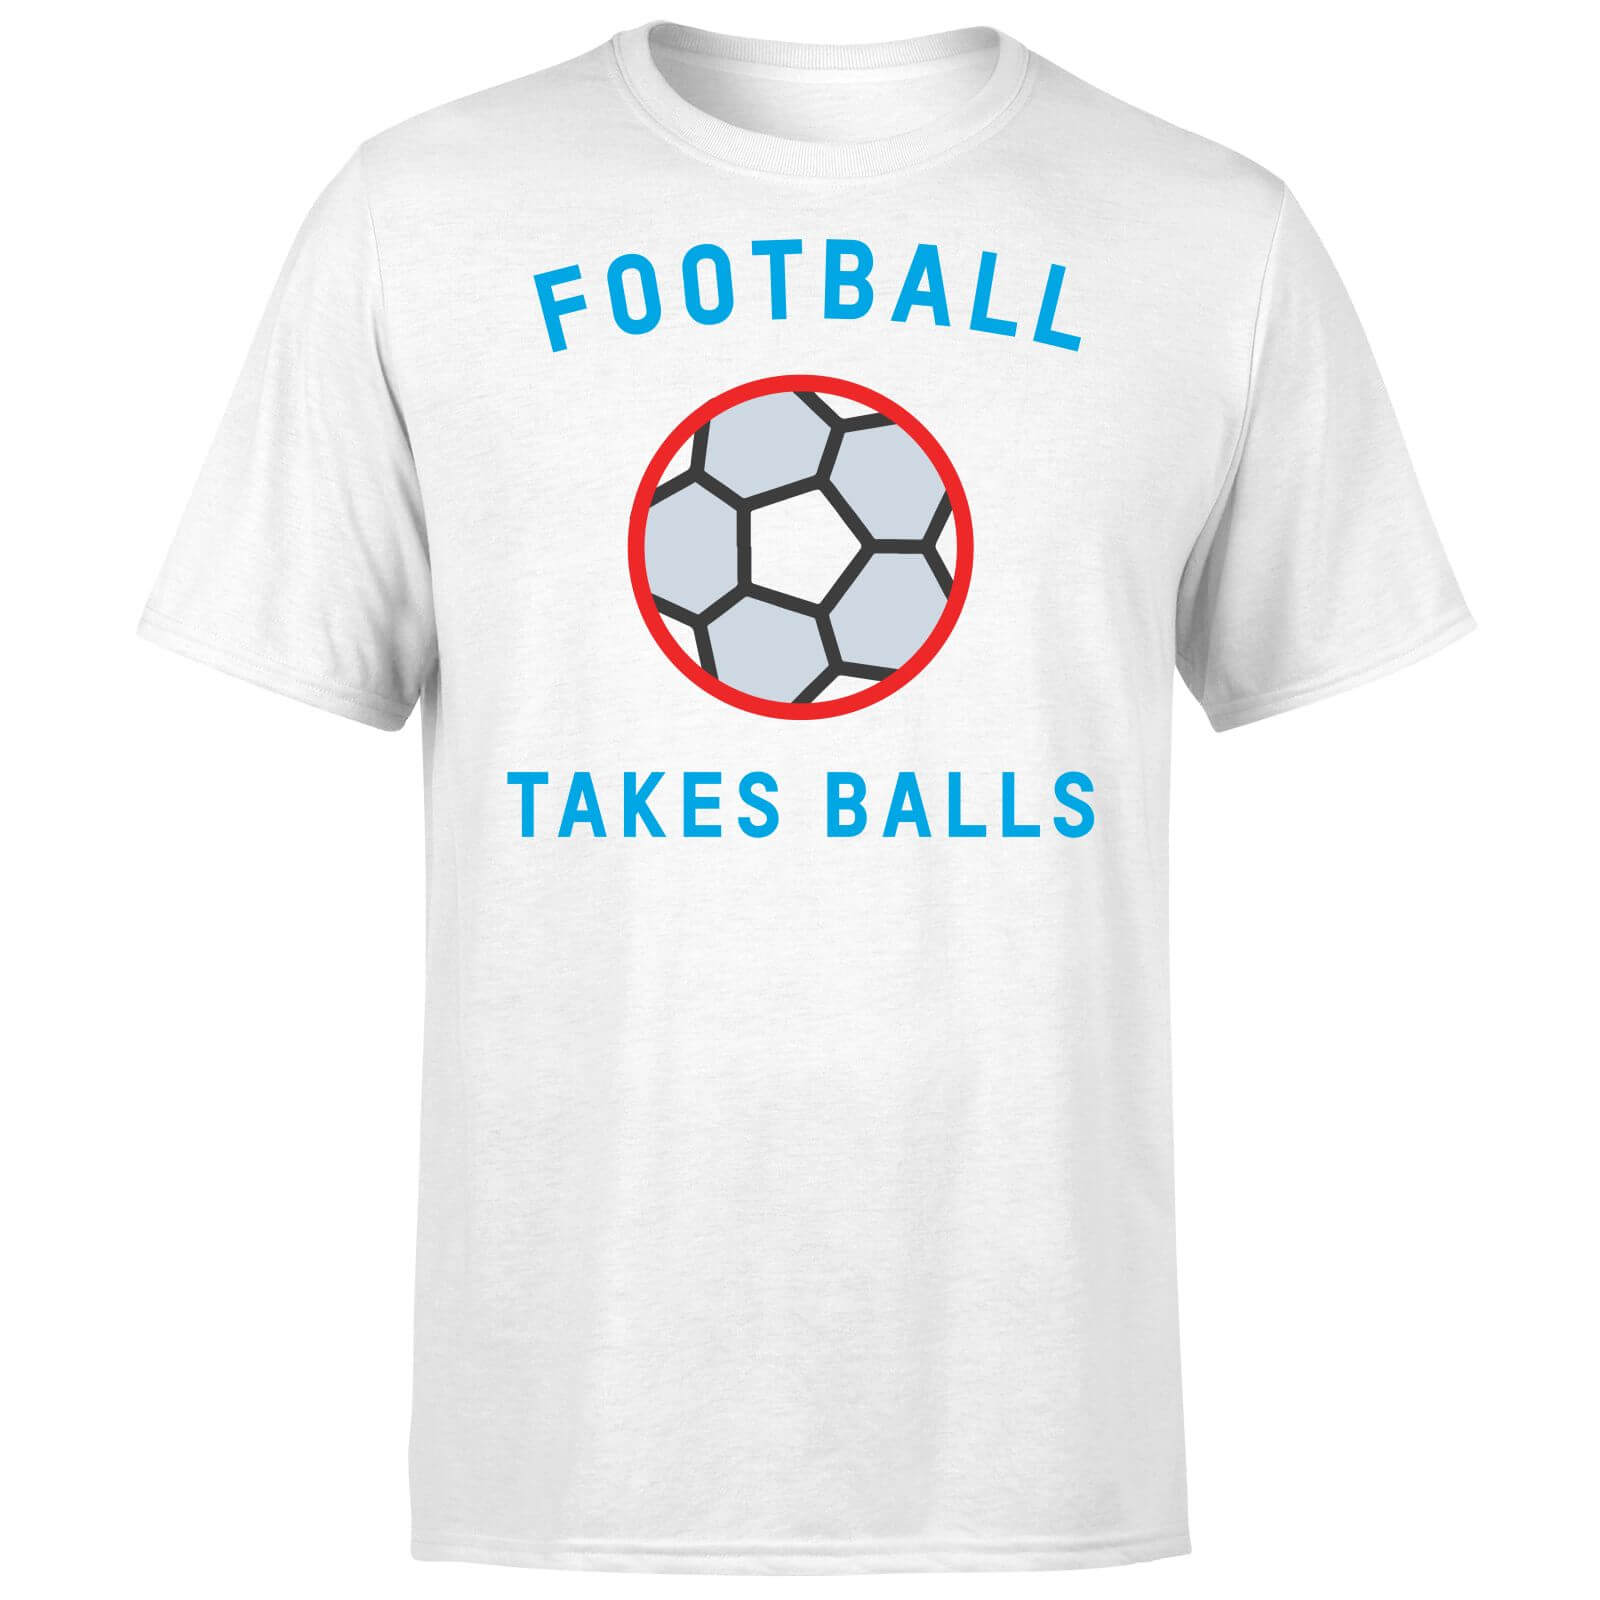 Football Takes Balls T-Shirt - White - L - White